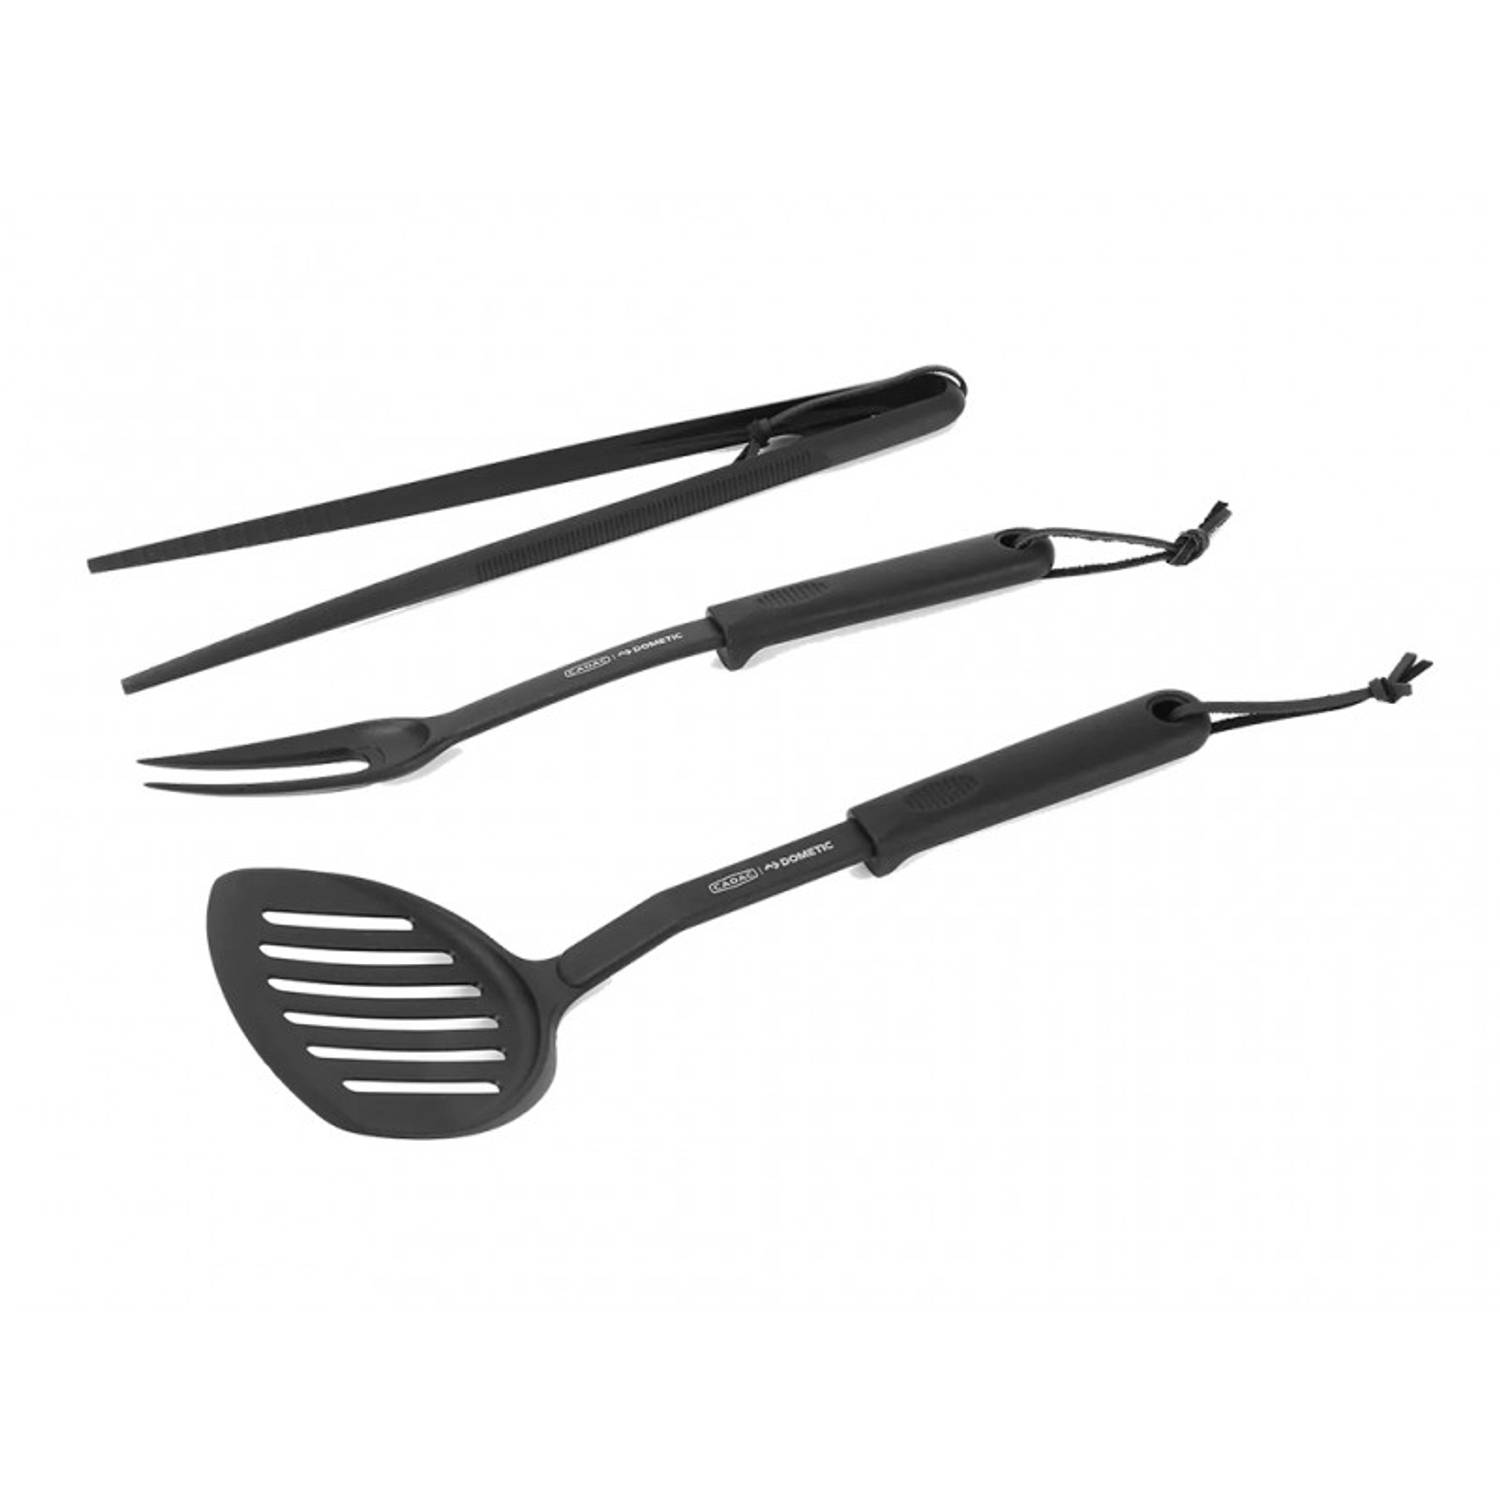 Cadac Tool set of 3 spatel, fork, tang